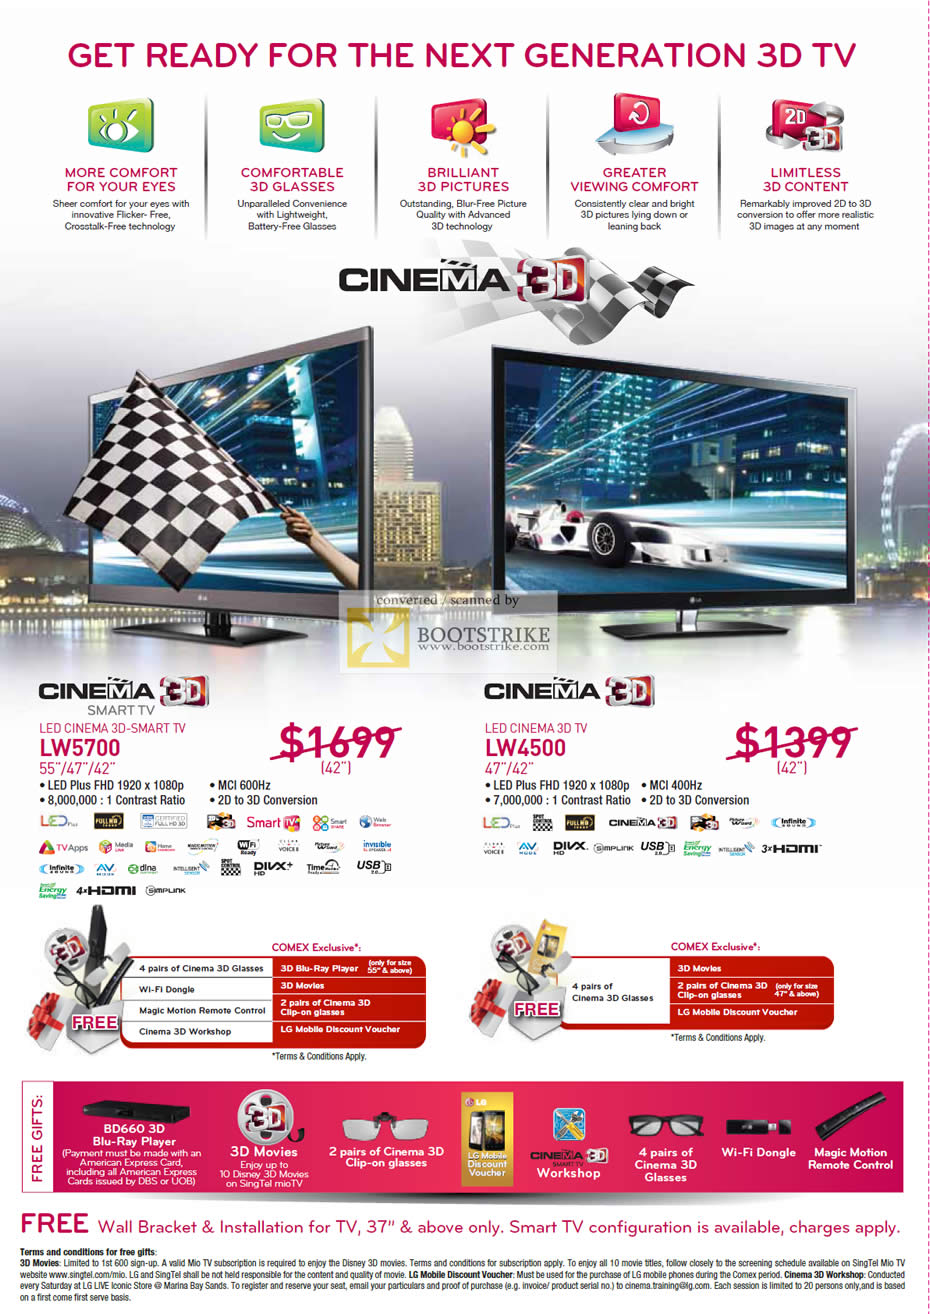 COMEX 2011 price list image brochure of LG TV LW5700 LW4500 Cinema 3D Smart